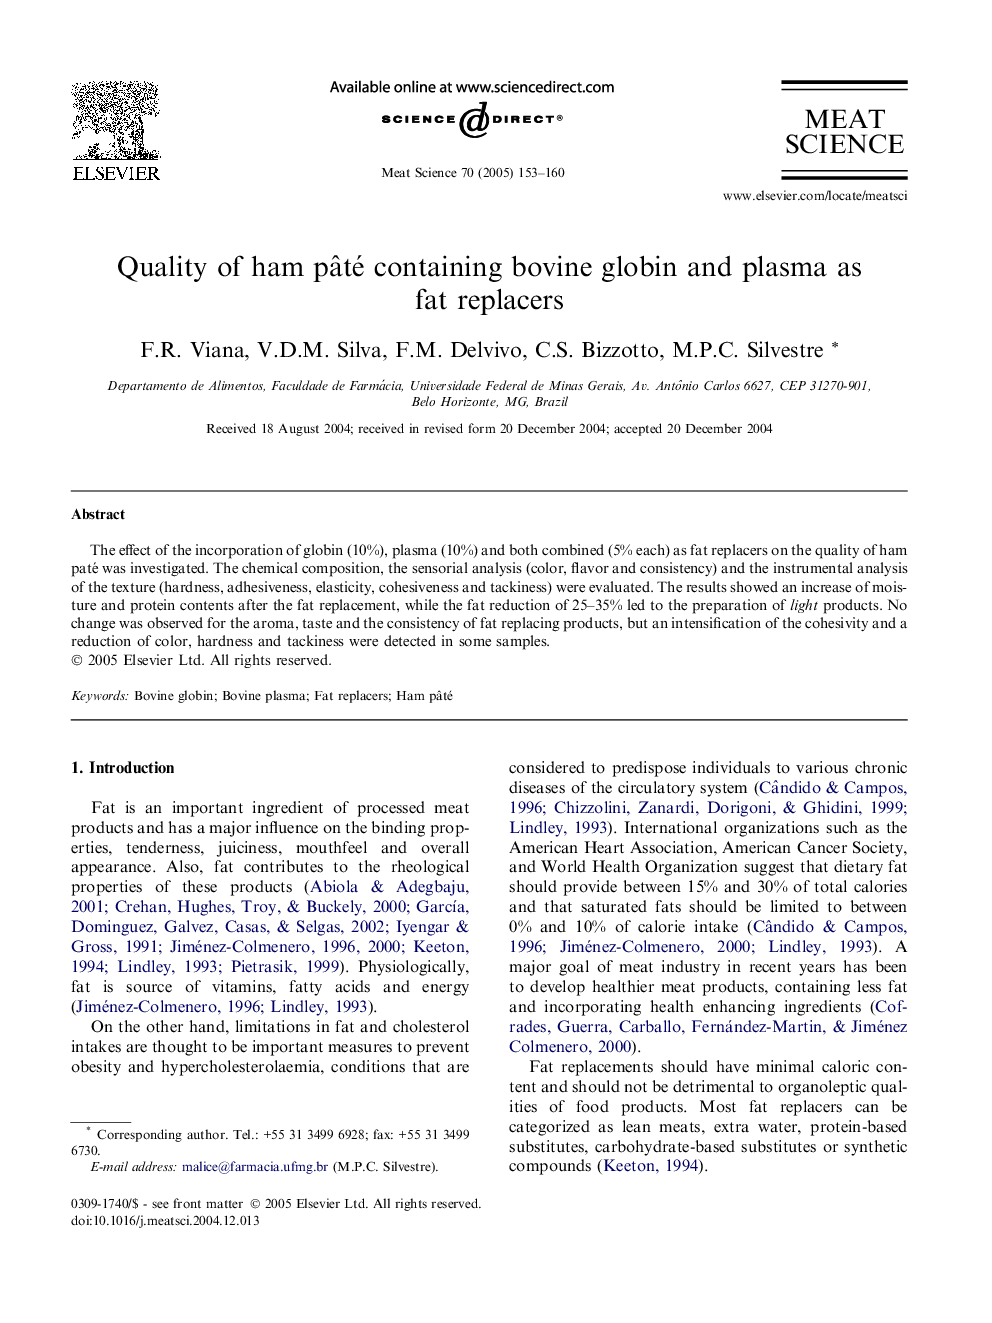 Quality of ham pÃ¢té containing bovine globin and plasma as fat replacers